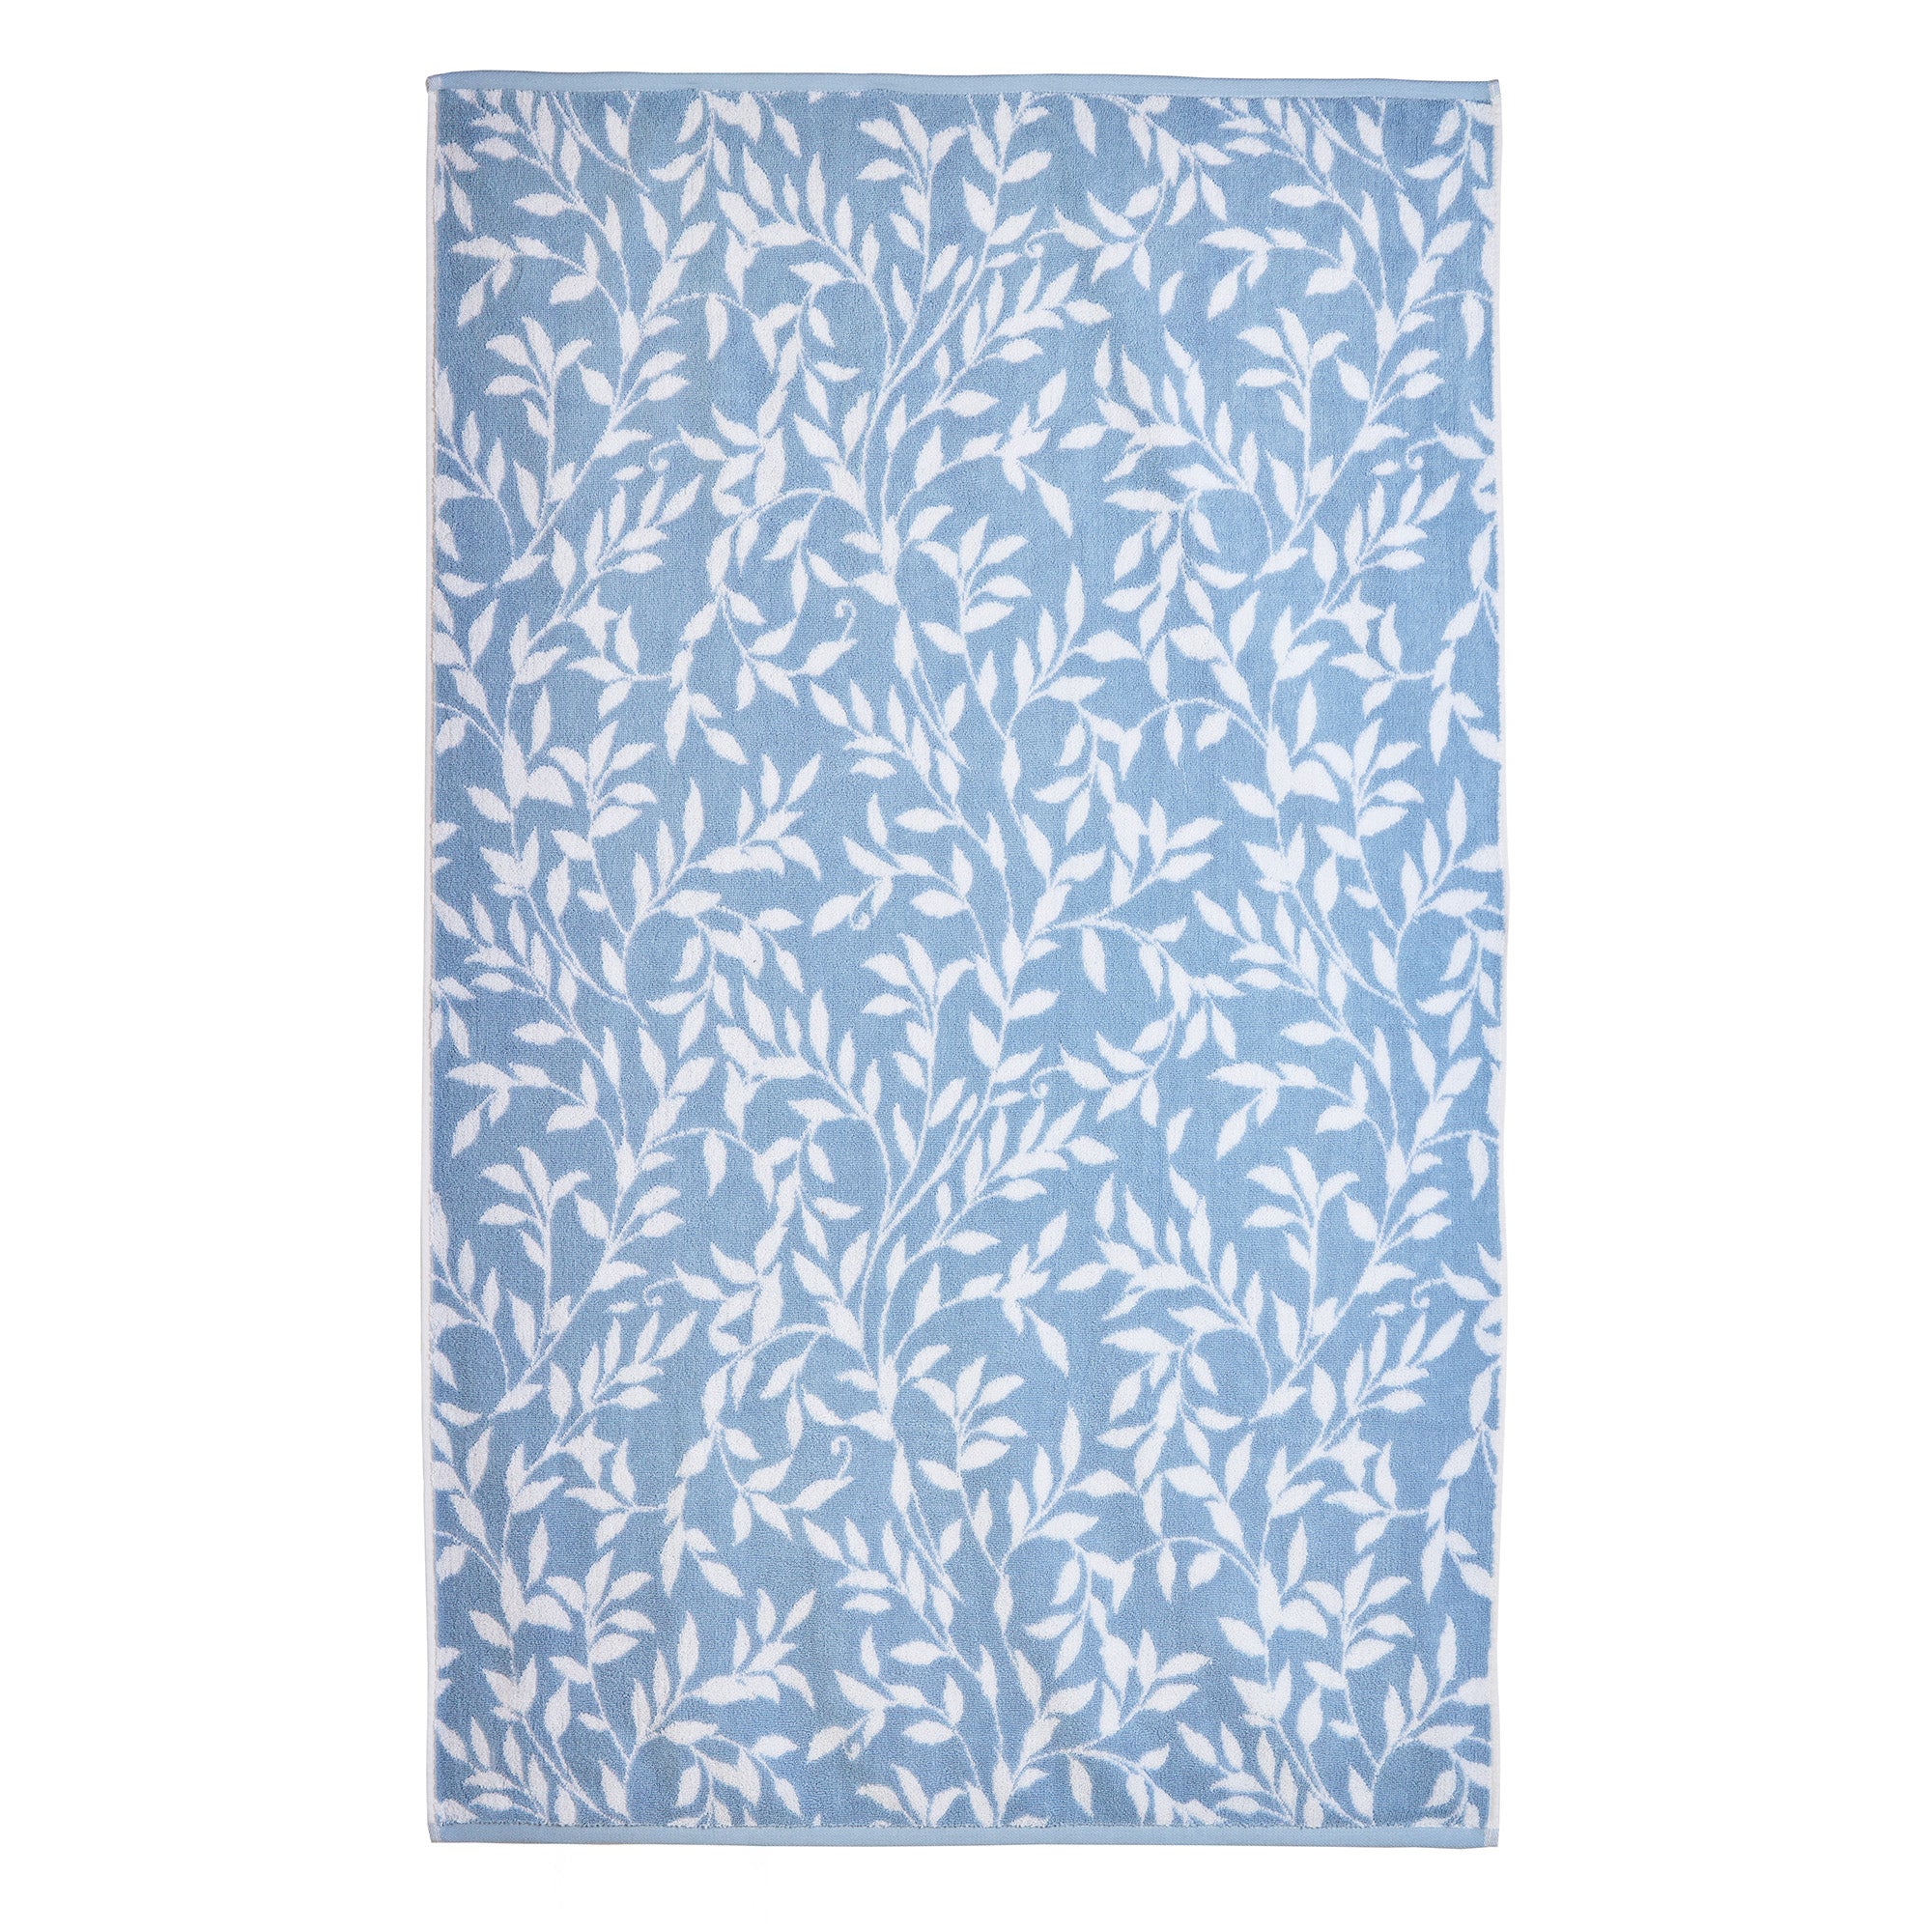 Hand Towel Sandringham by D&D Bathroom in Pale Blue